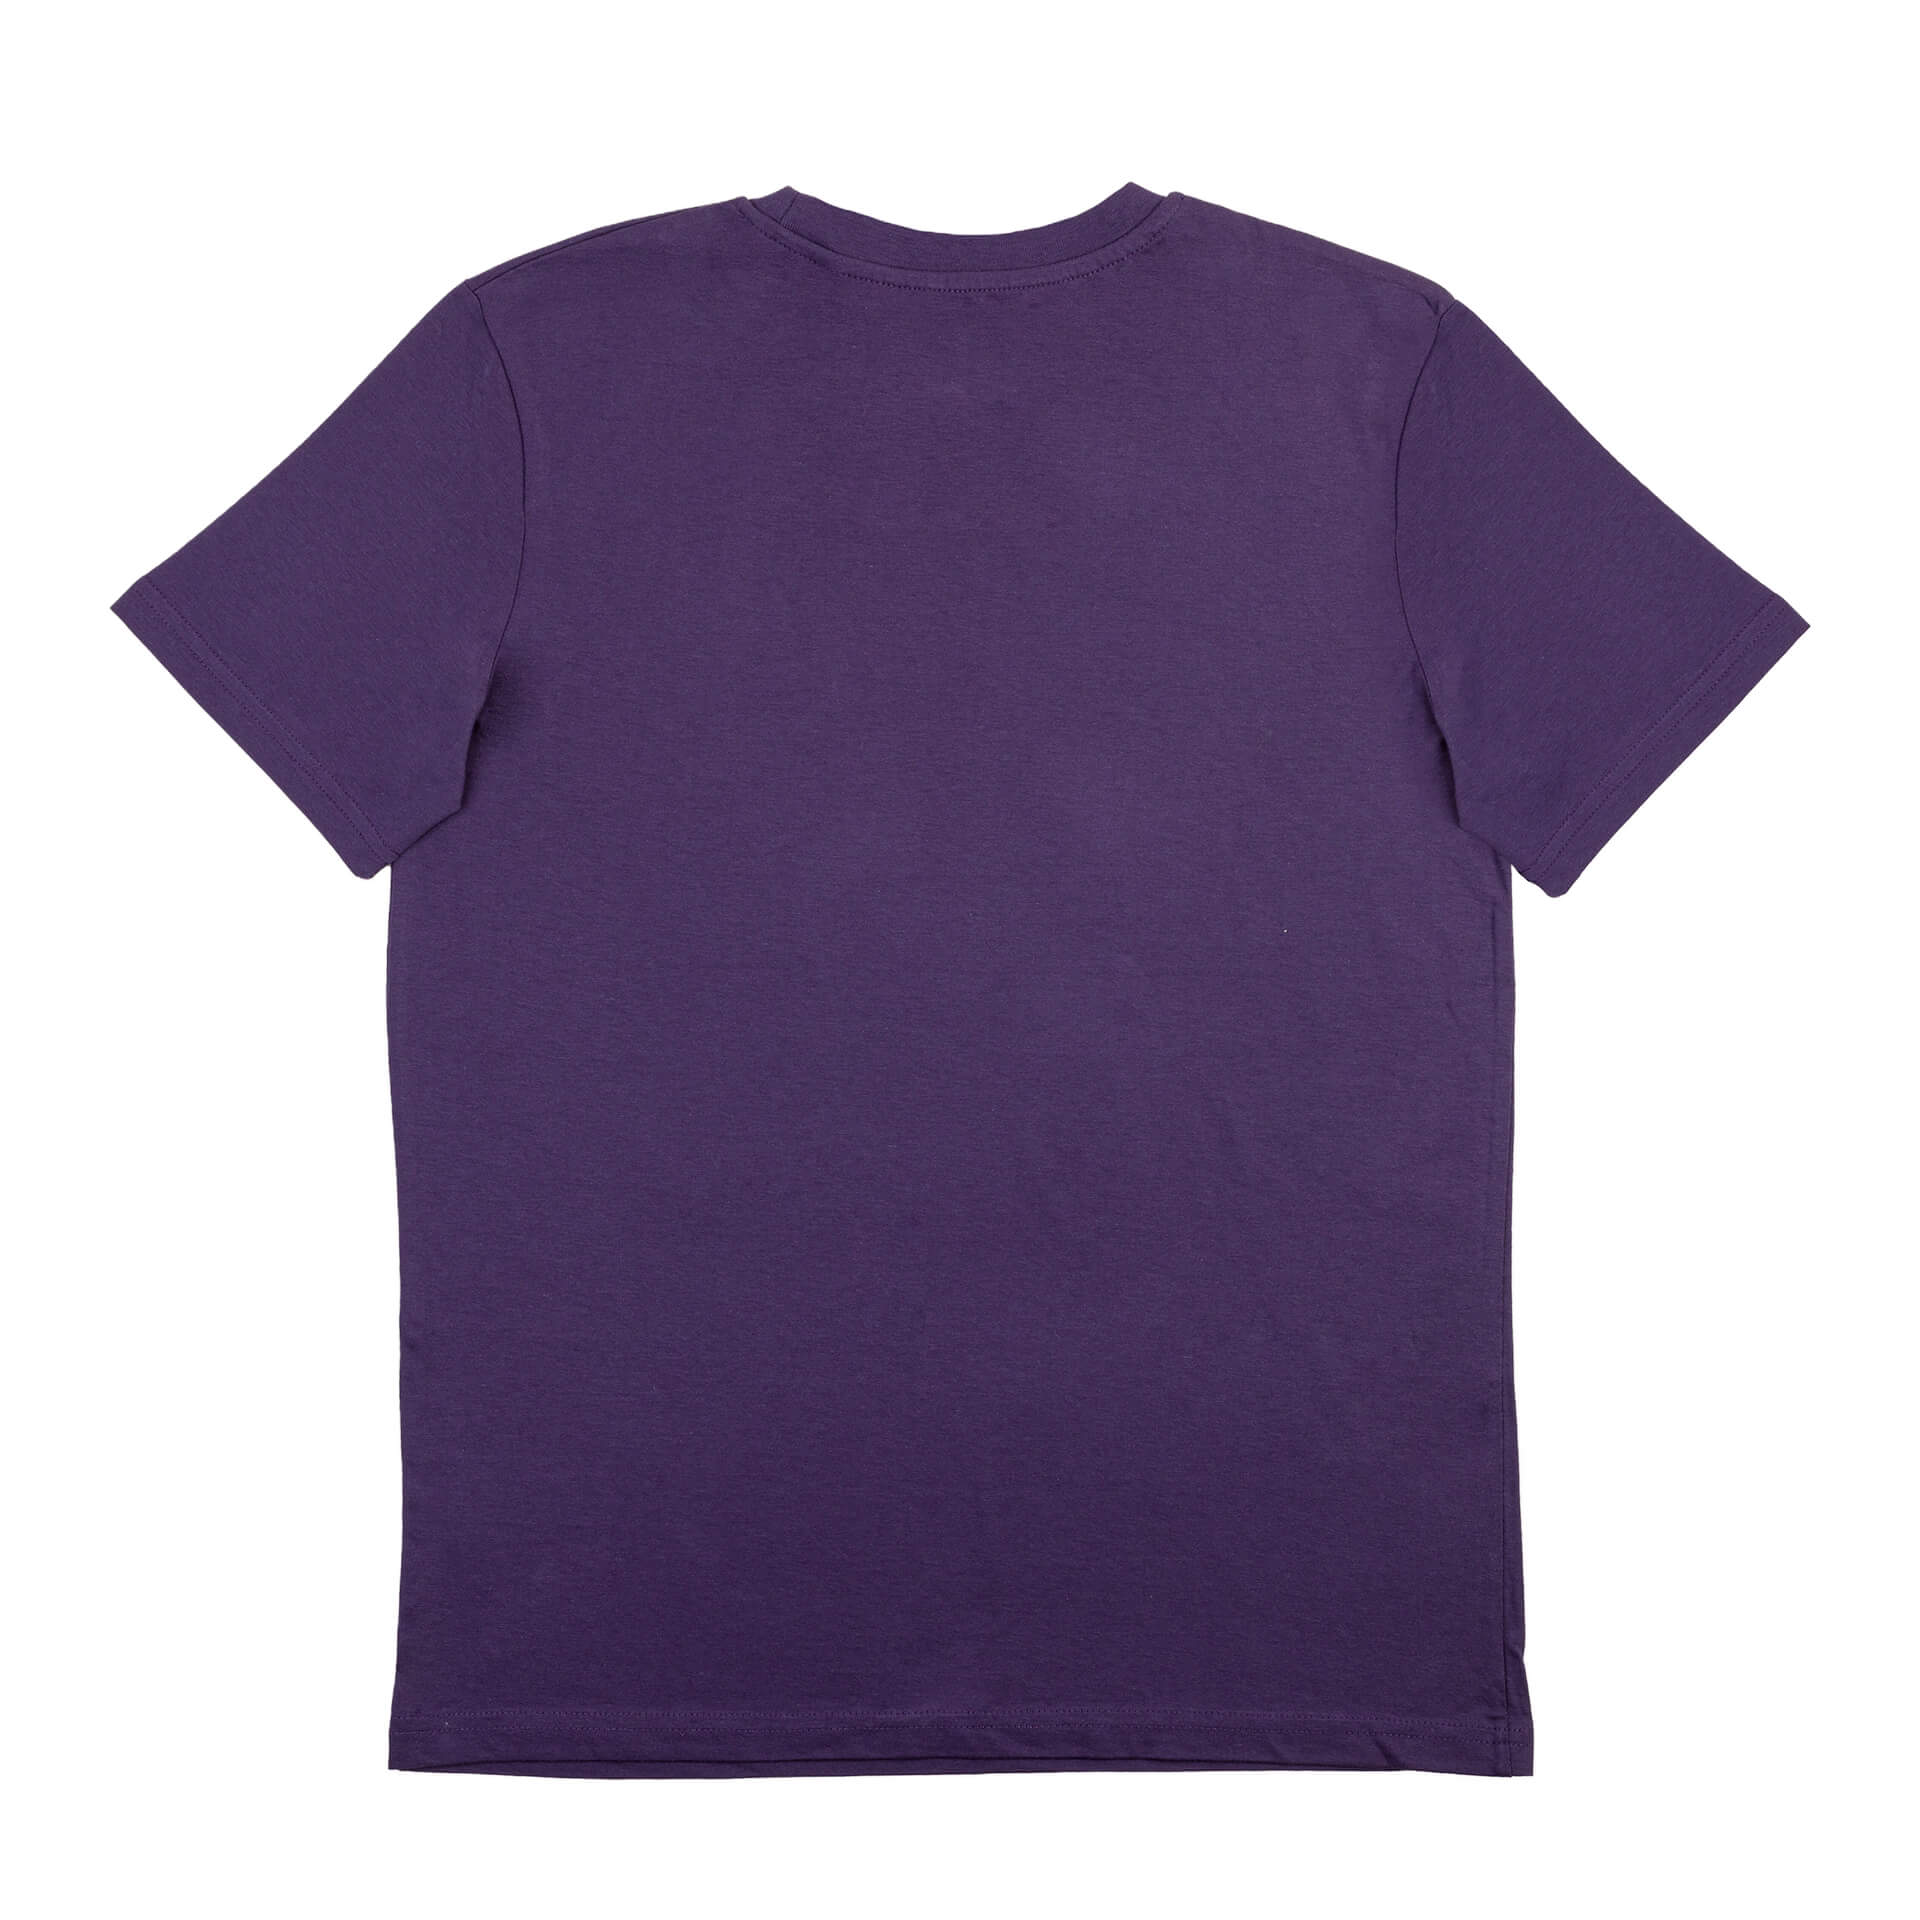 T-Shirt Indigo Hush 1908